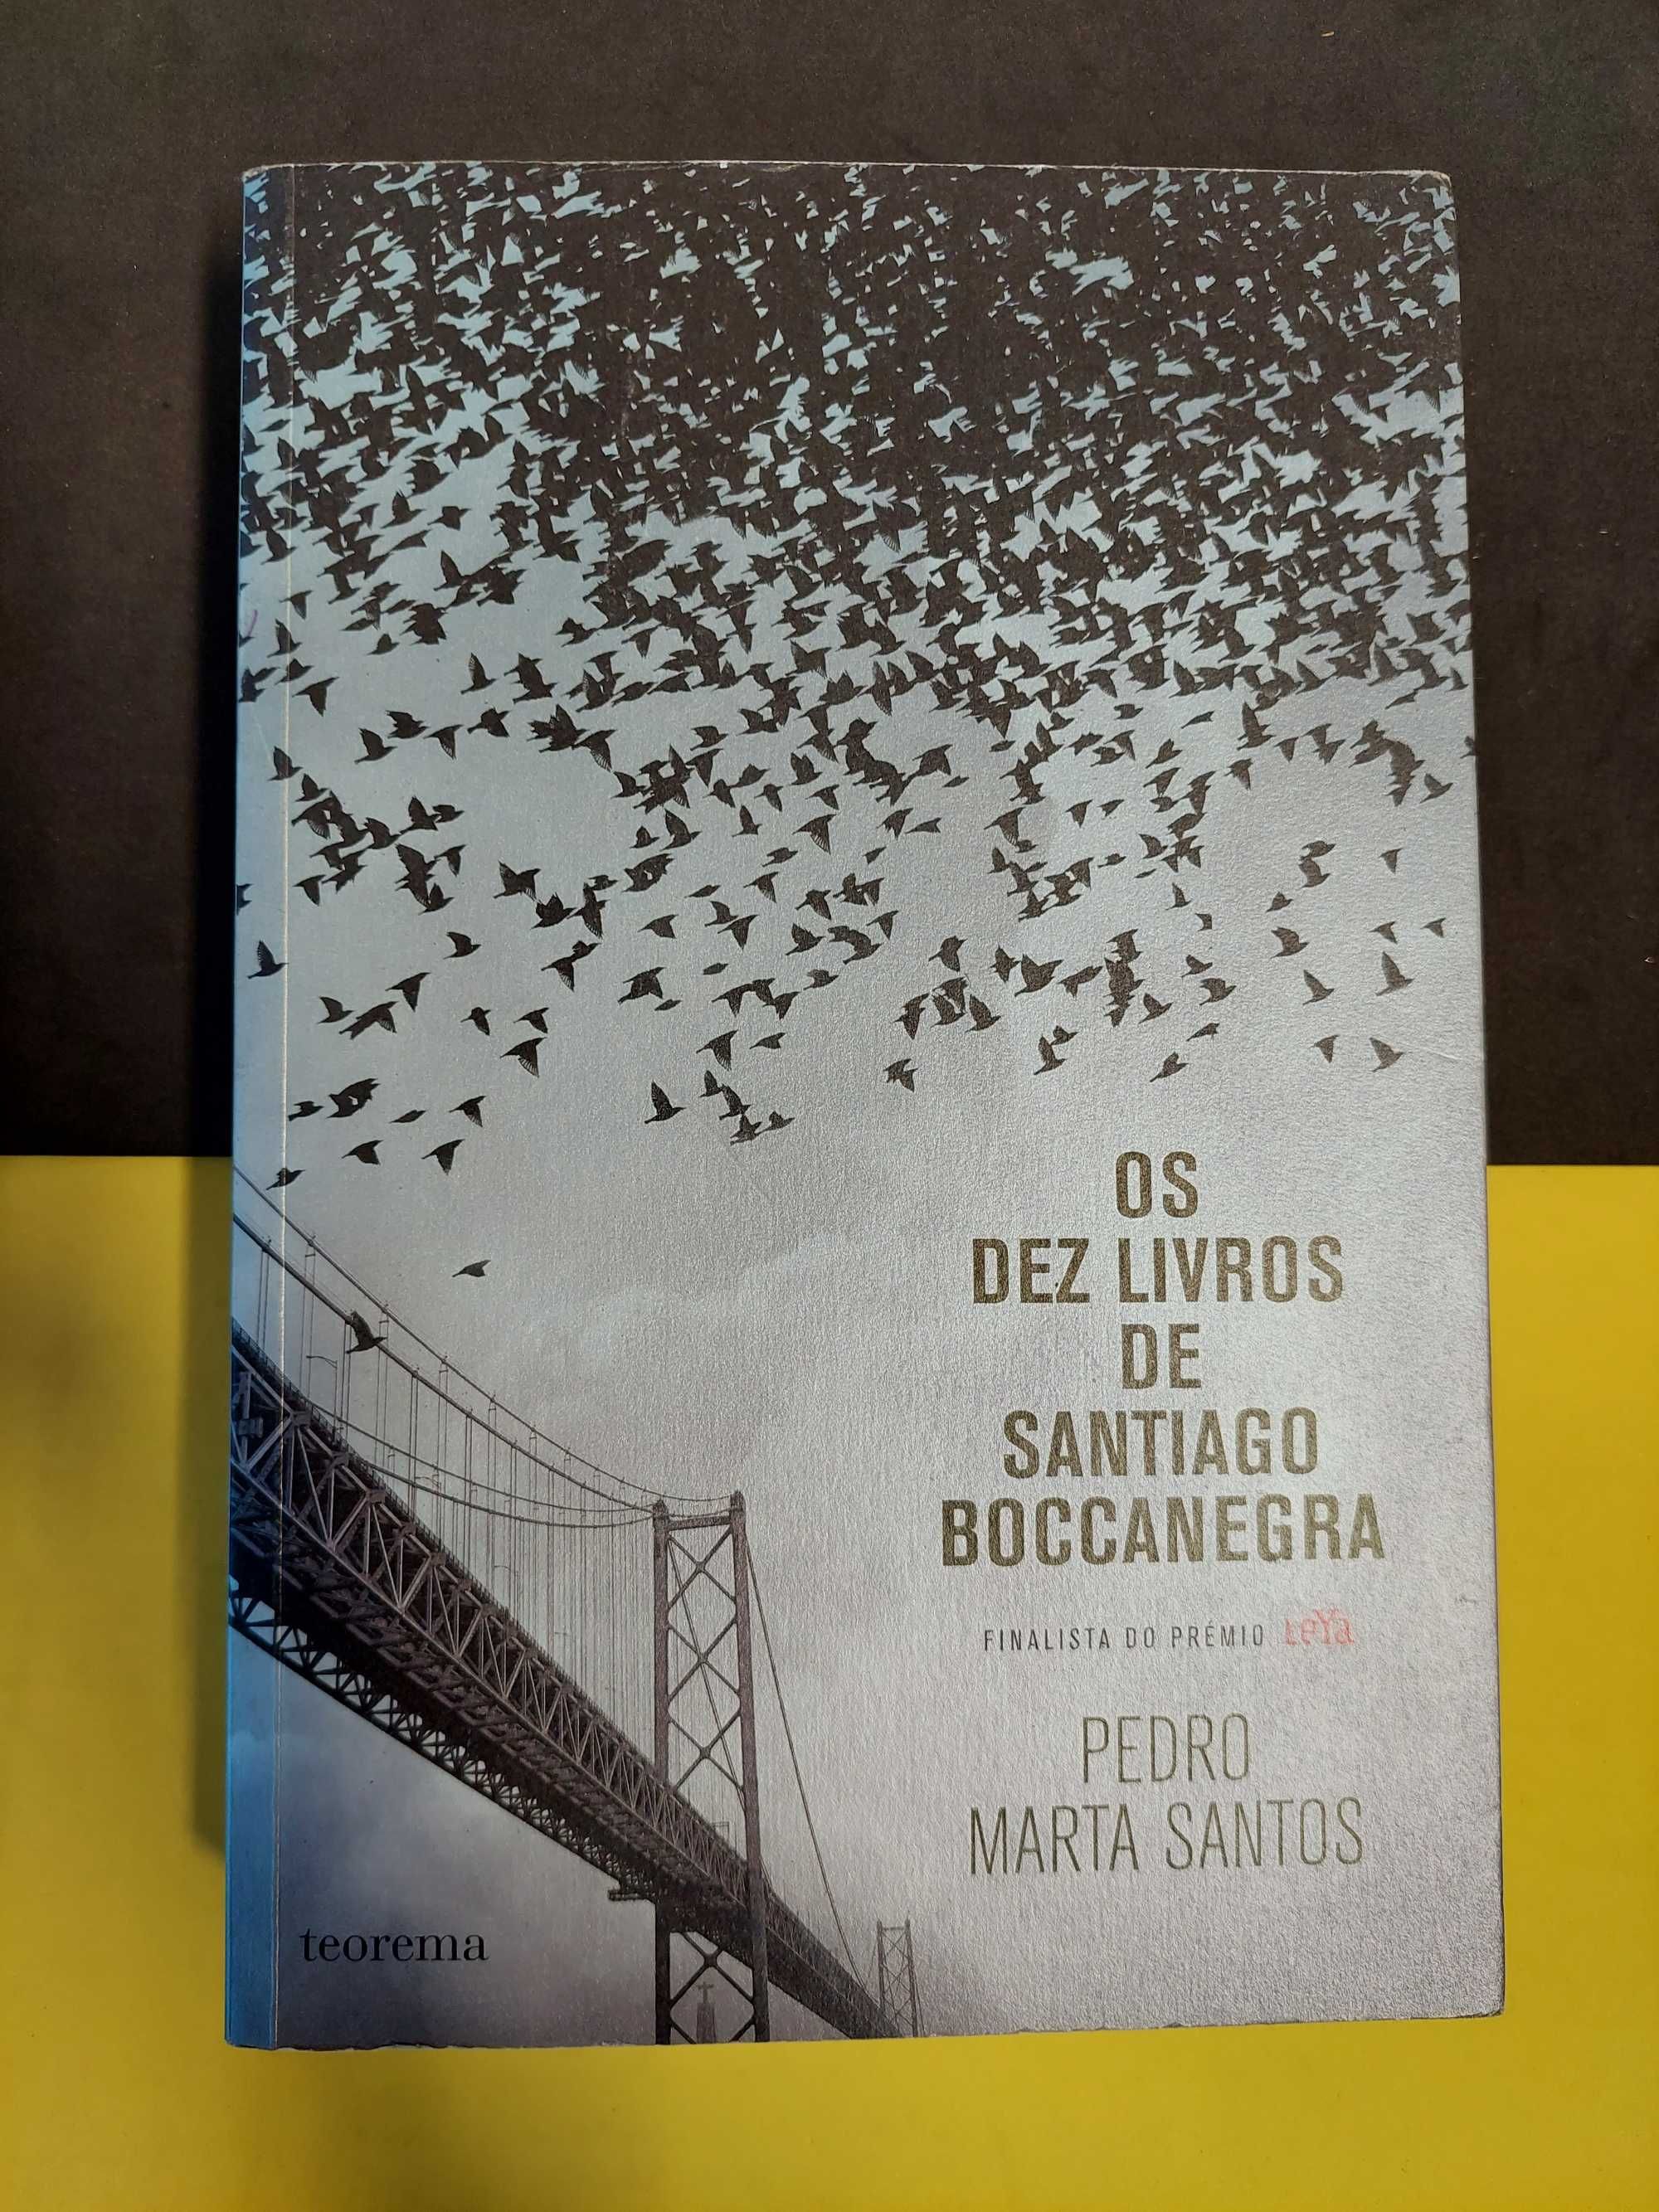 Pedro Marta Santos - Os dez livros de Santiago Boccanegra